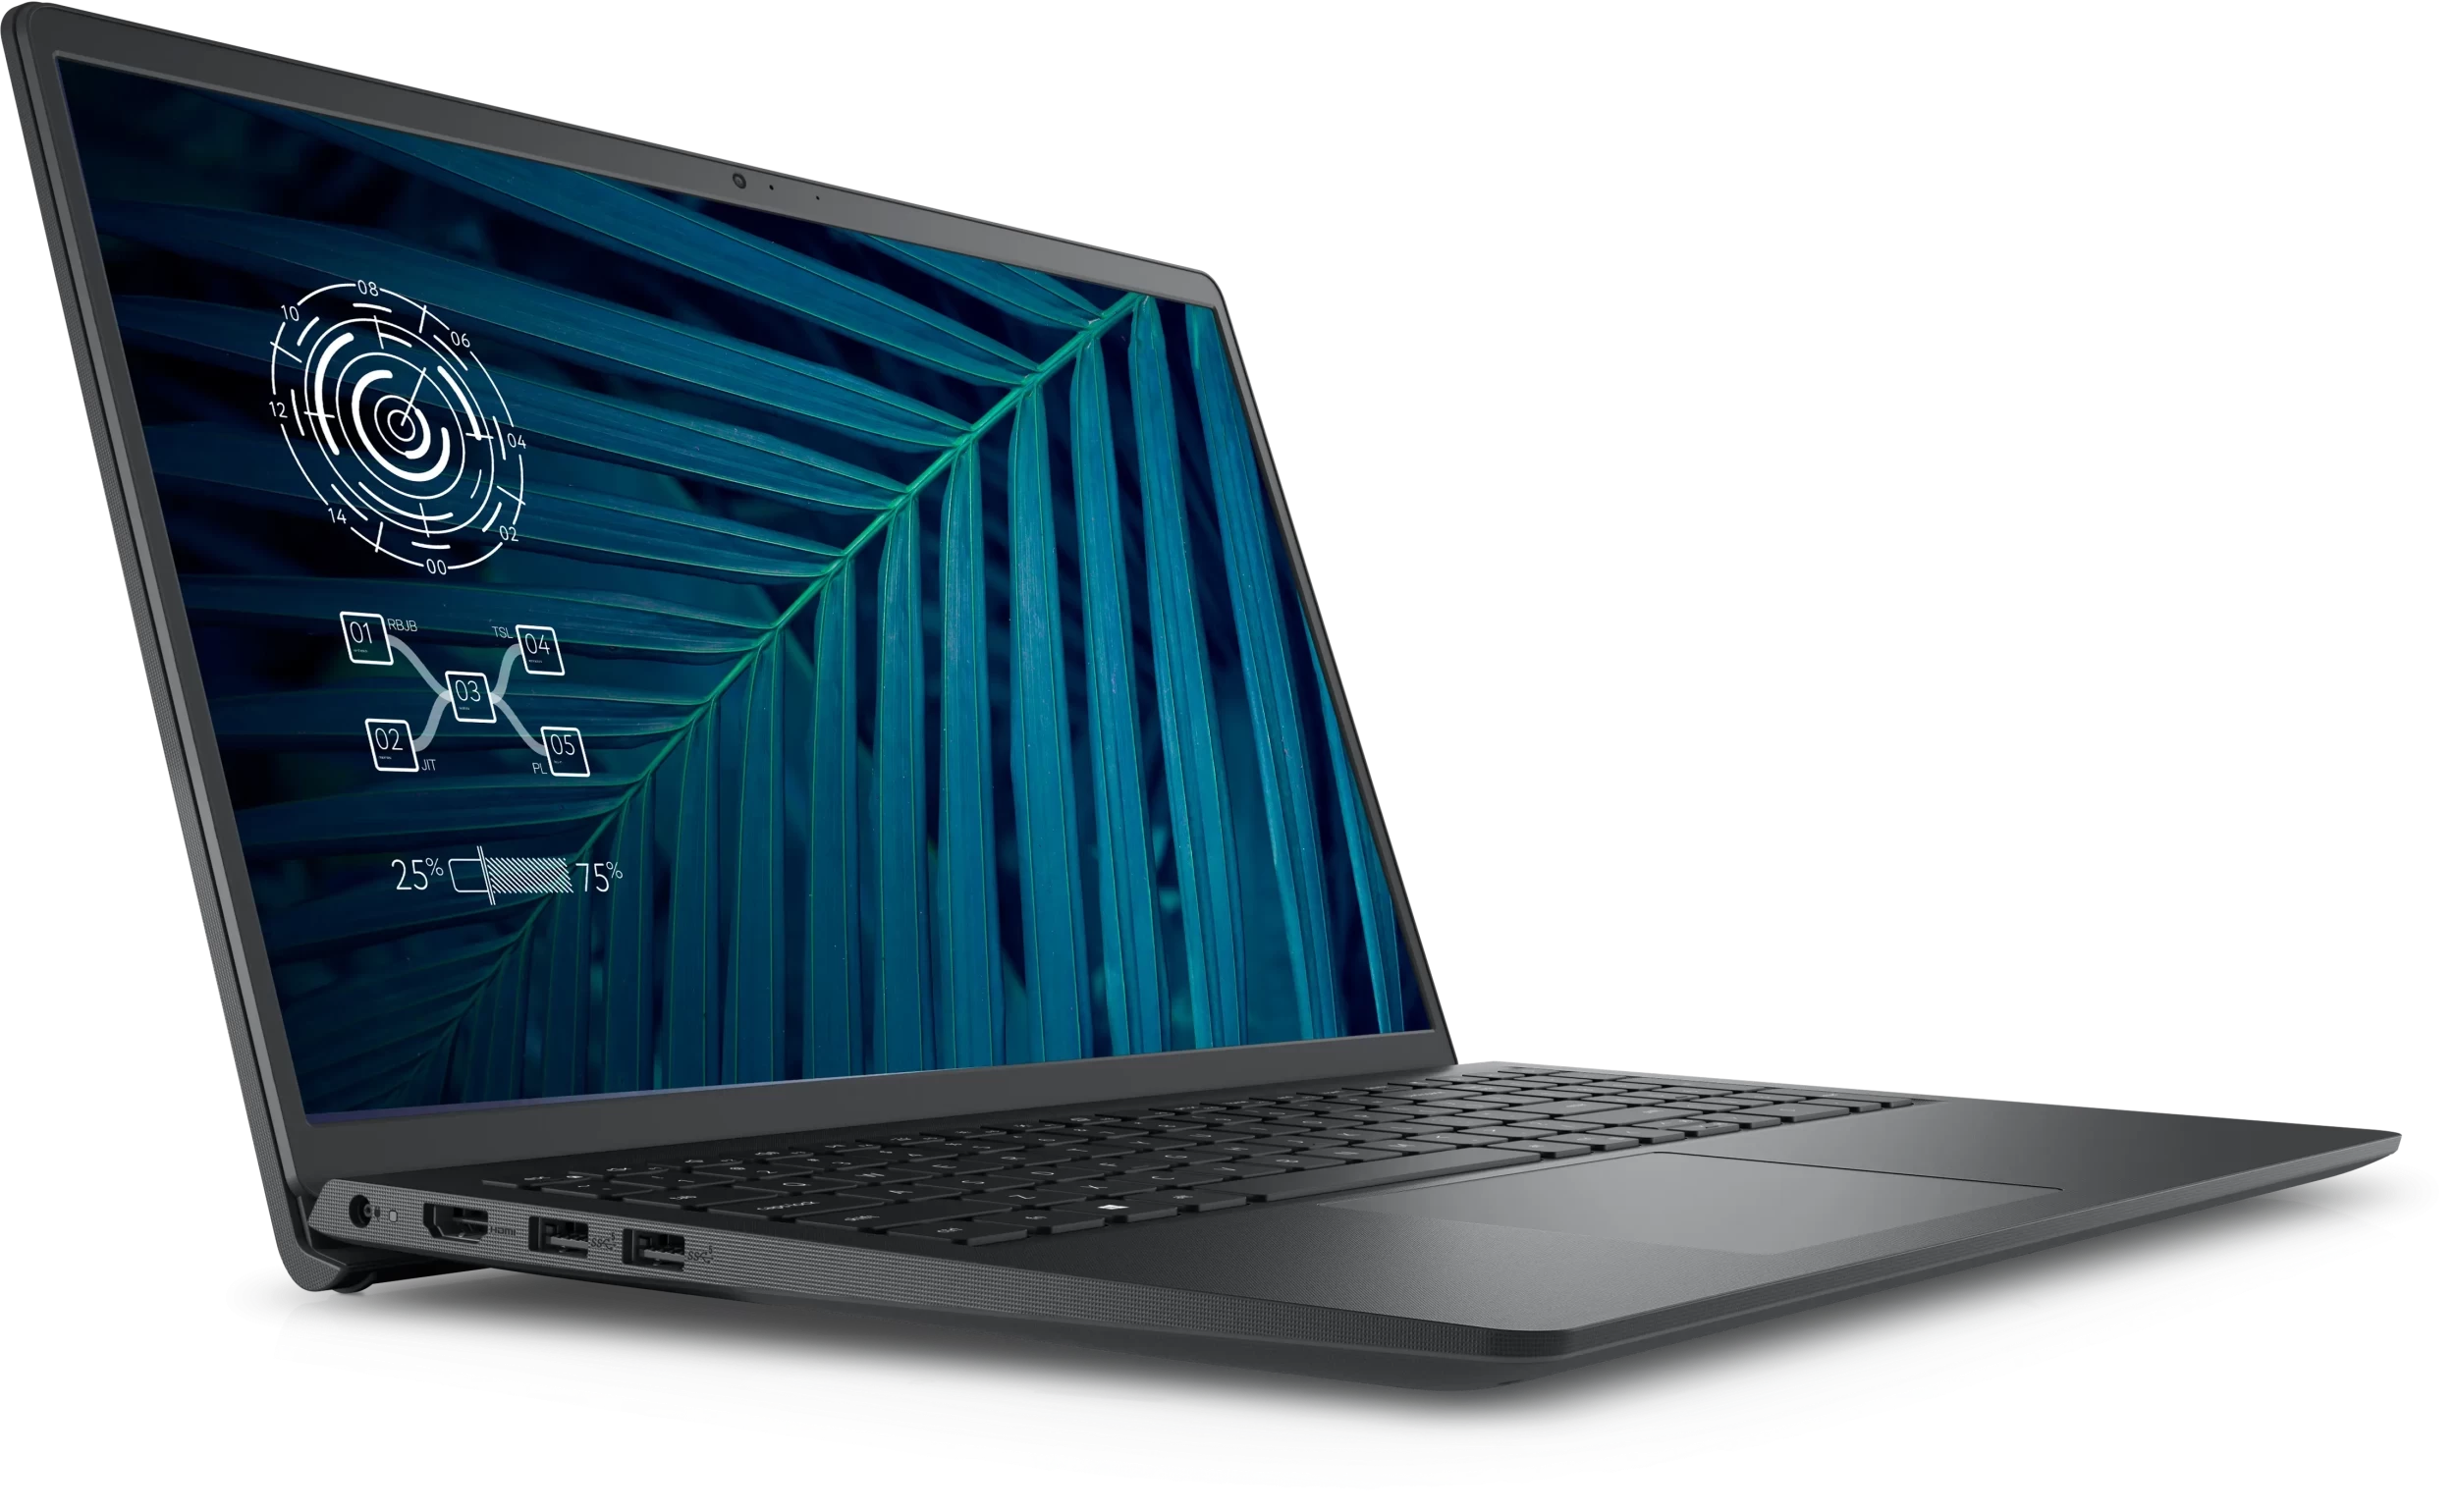 Dell Vostro 3510 Laptop, Intel Core i5-1135G7, 256 SSD, 4GB RAM, GeForce MX350 2GB,15.6 Inch,Ubuntu,Carbon Black